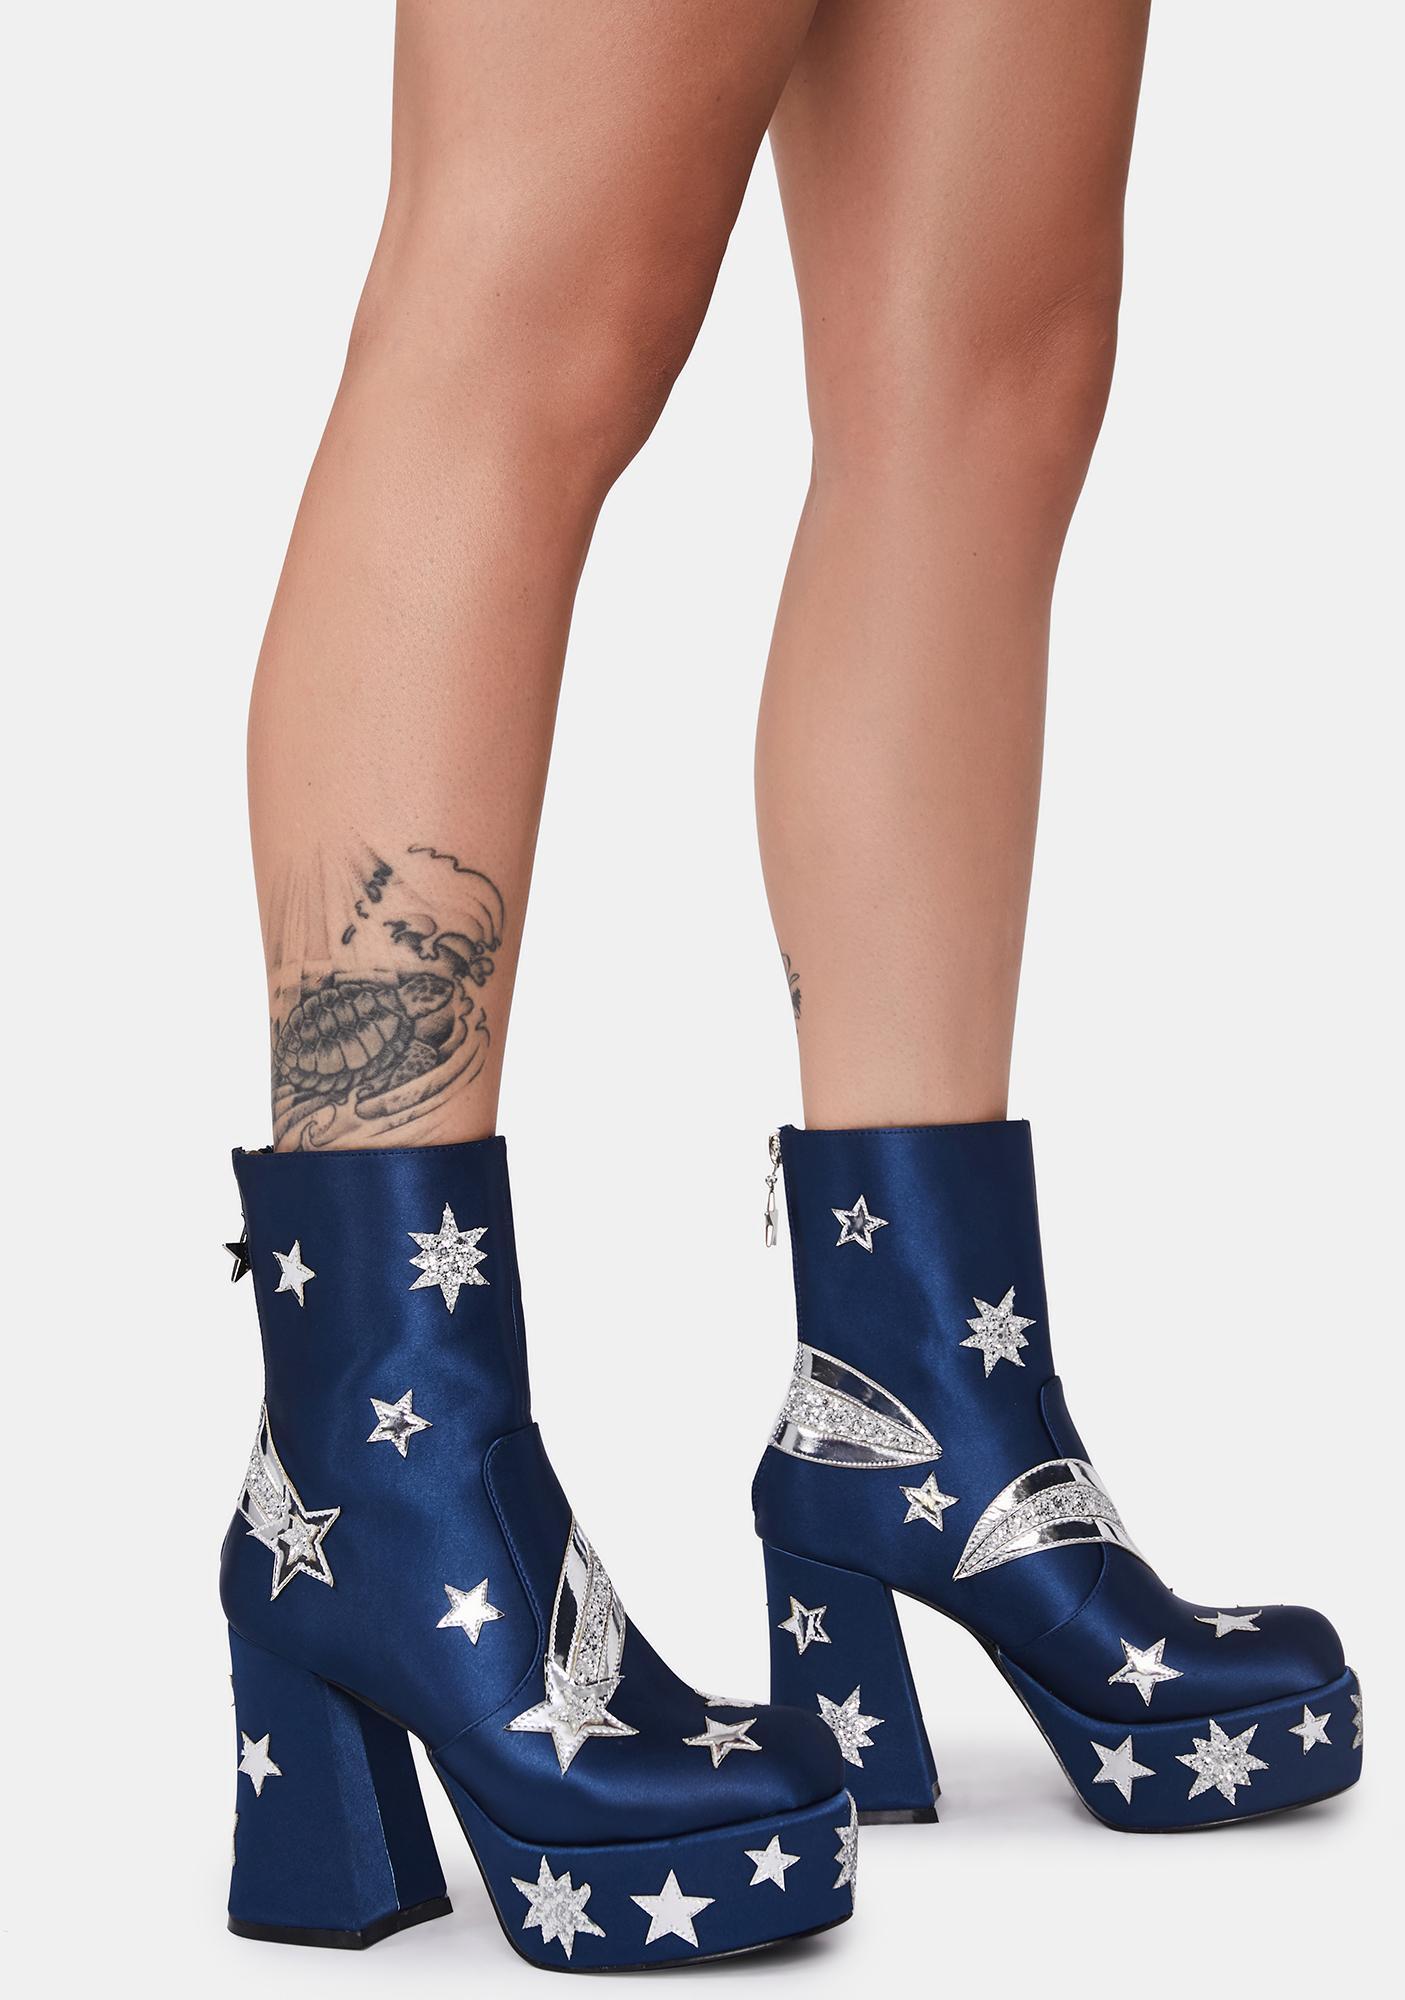 Horoscopez Libra Embroidered Stars Platform Boots Blue Dolls Kill - boots créateur de contenu brawl stars